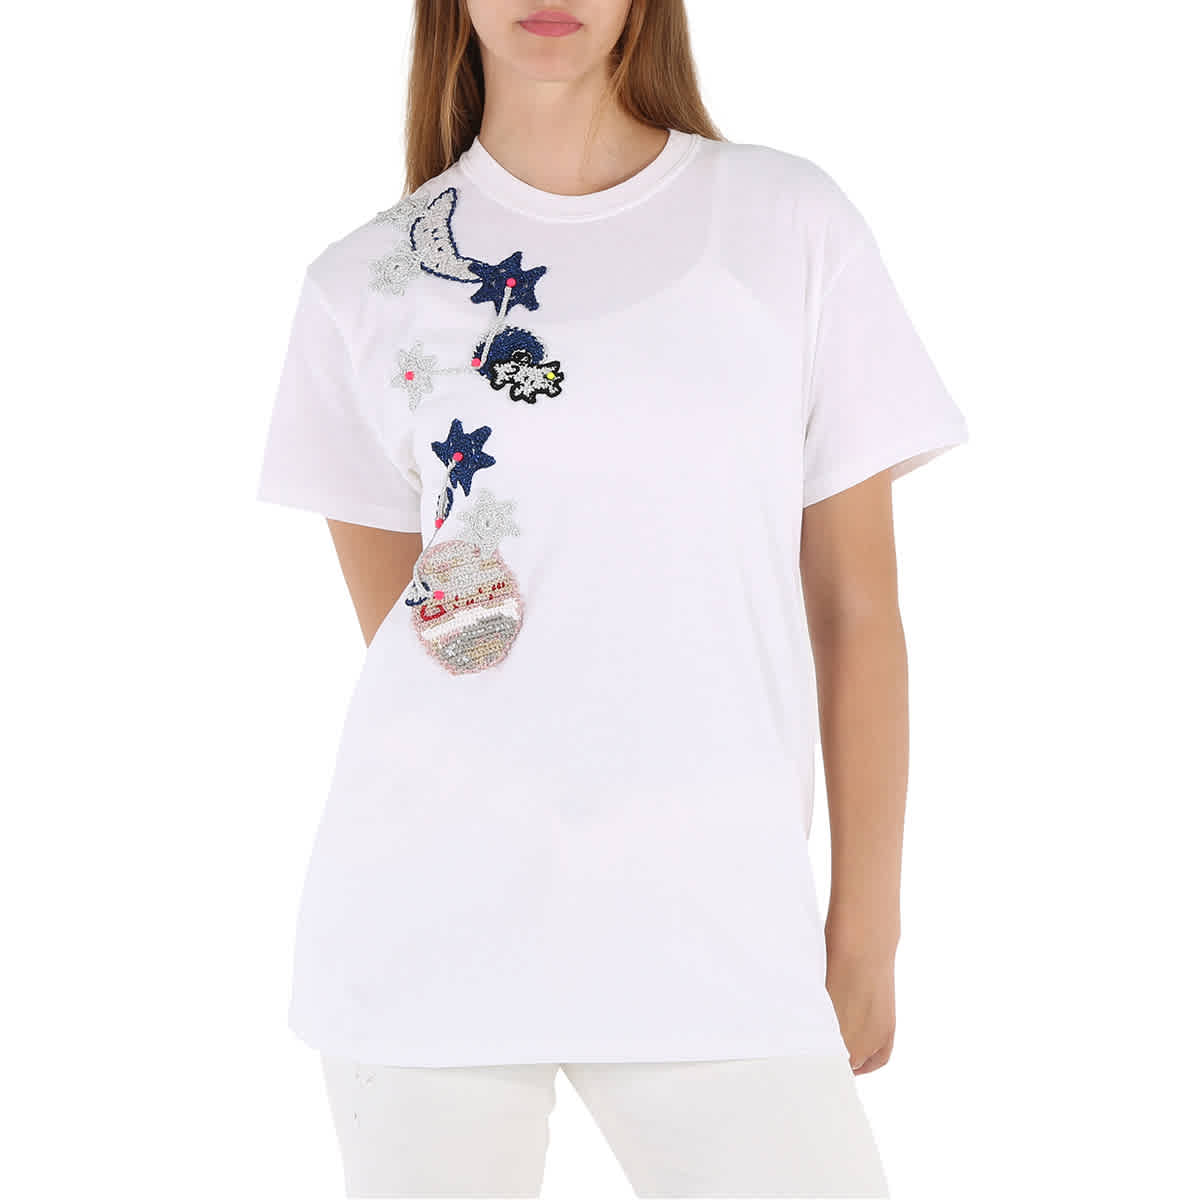 Michaela Buerger Pig On Moon T-shirt In White